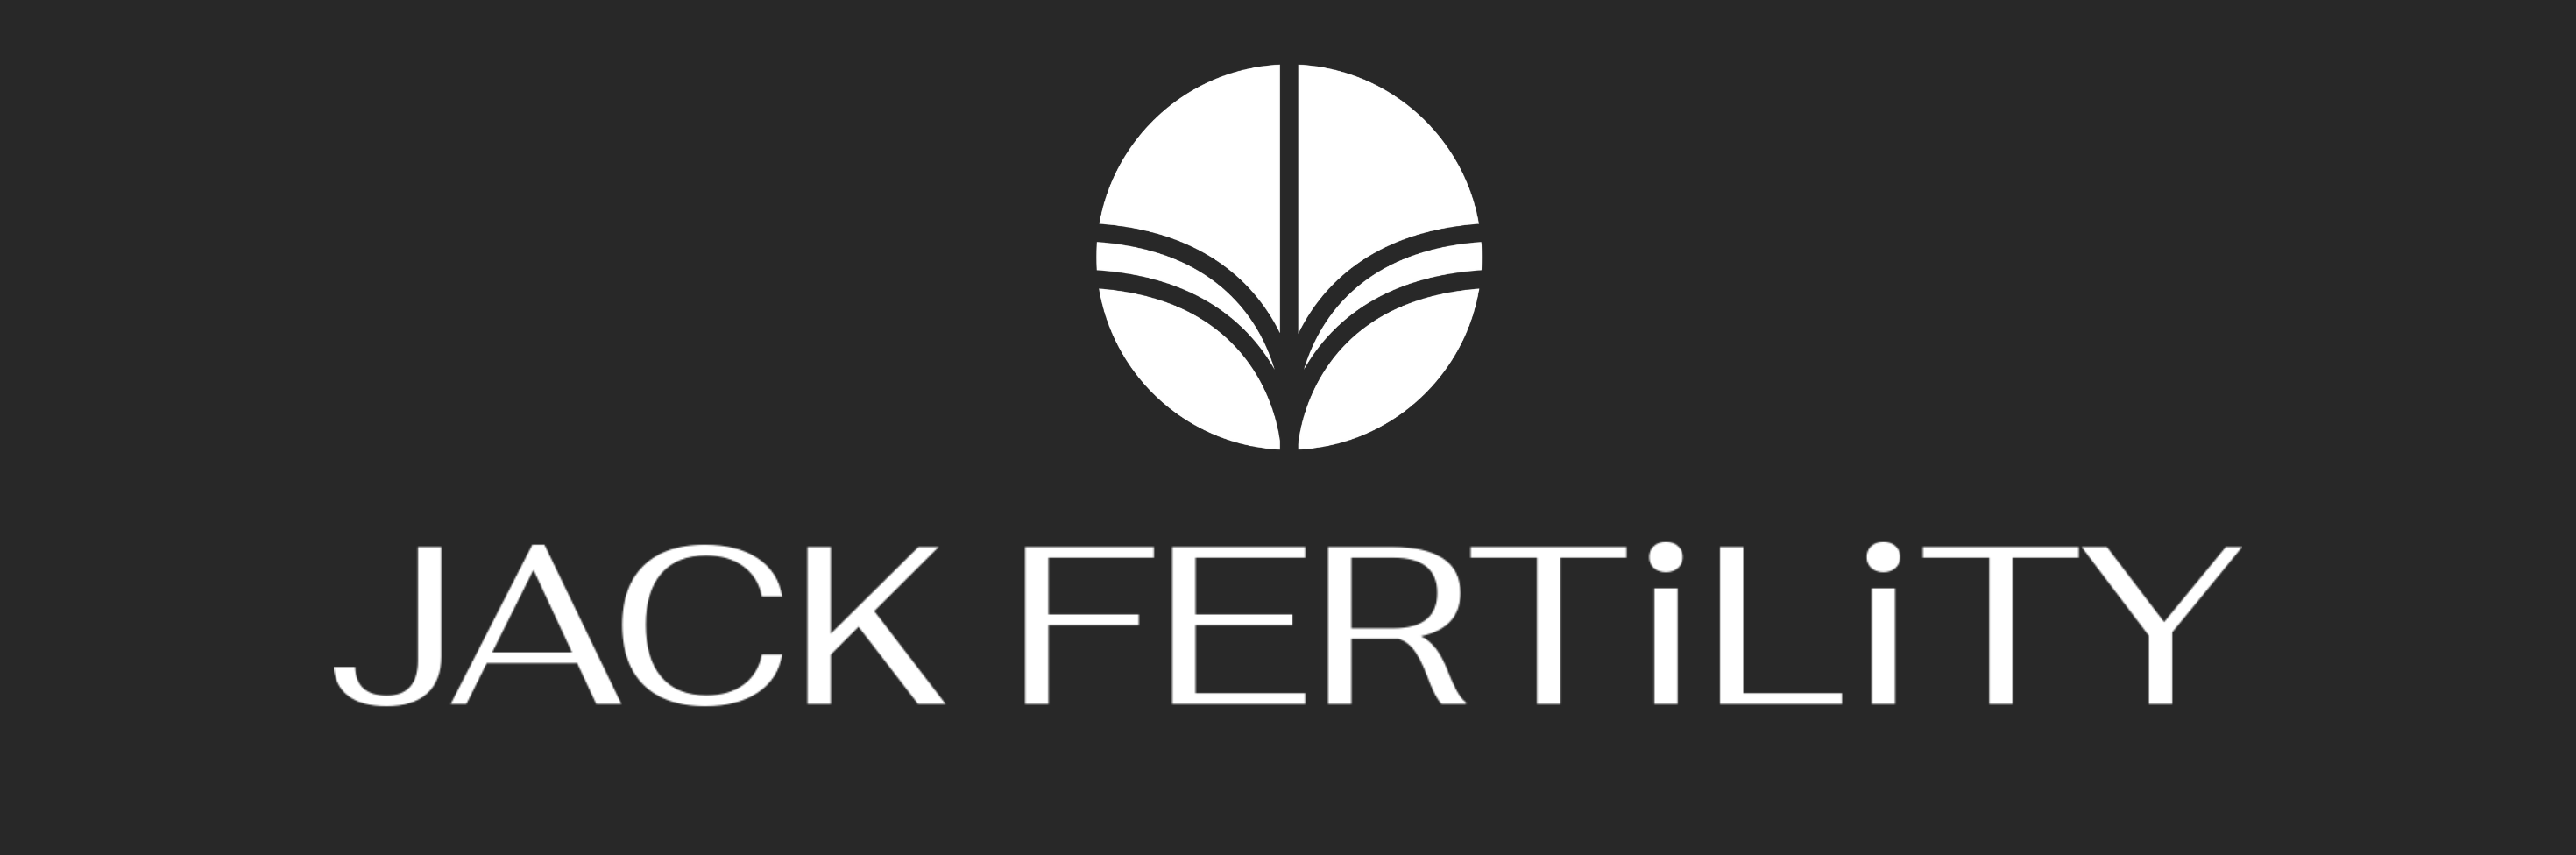 Jack Fertility logo - white font on black with circular icon